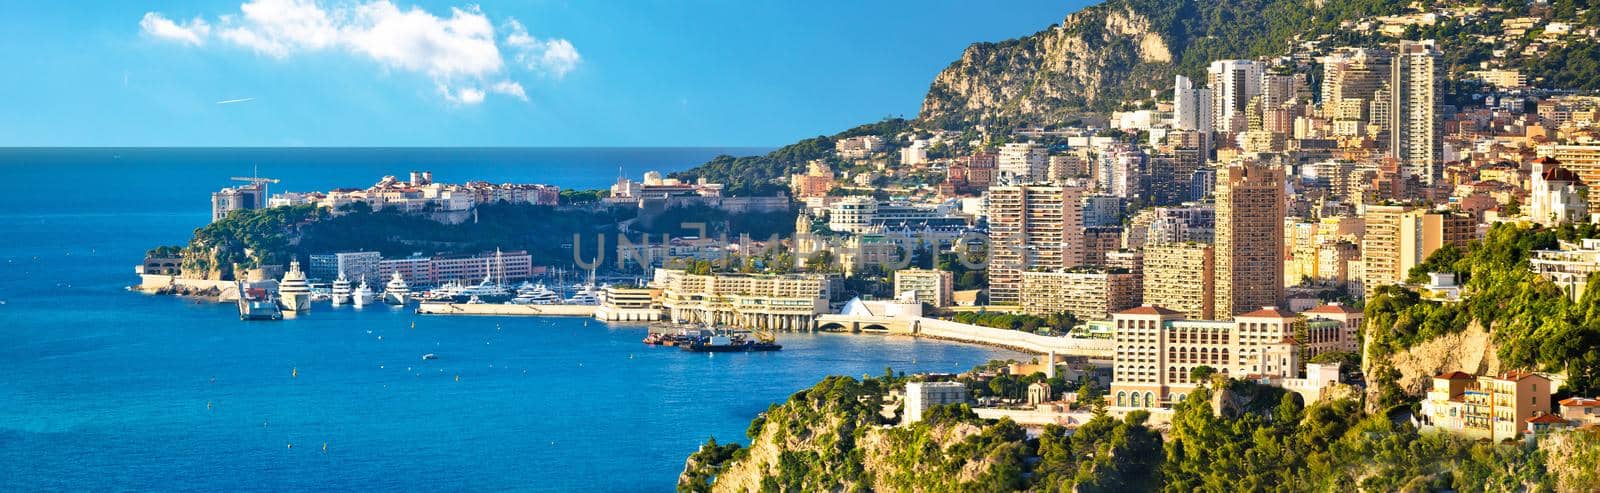 Monaco cityscape and coastline panoramic view by xbrchx